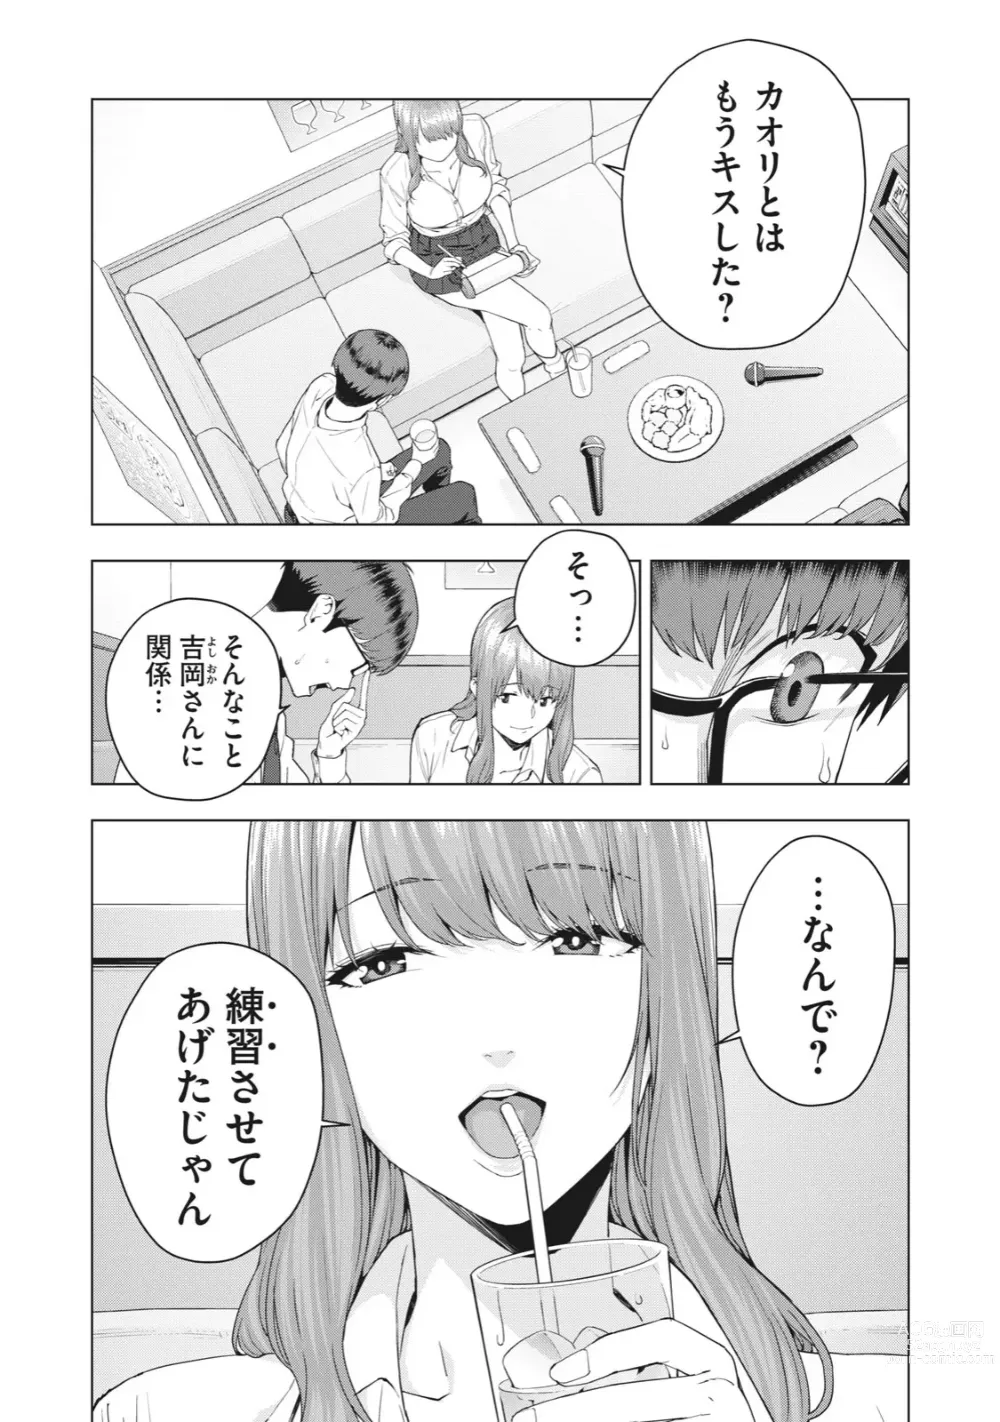 Page 7 of manga Kanojo no Tomodachi